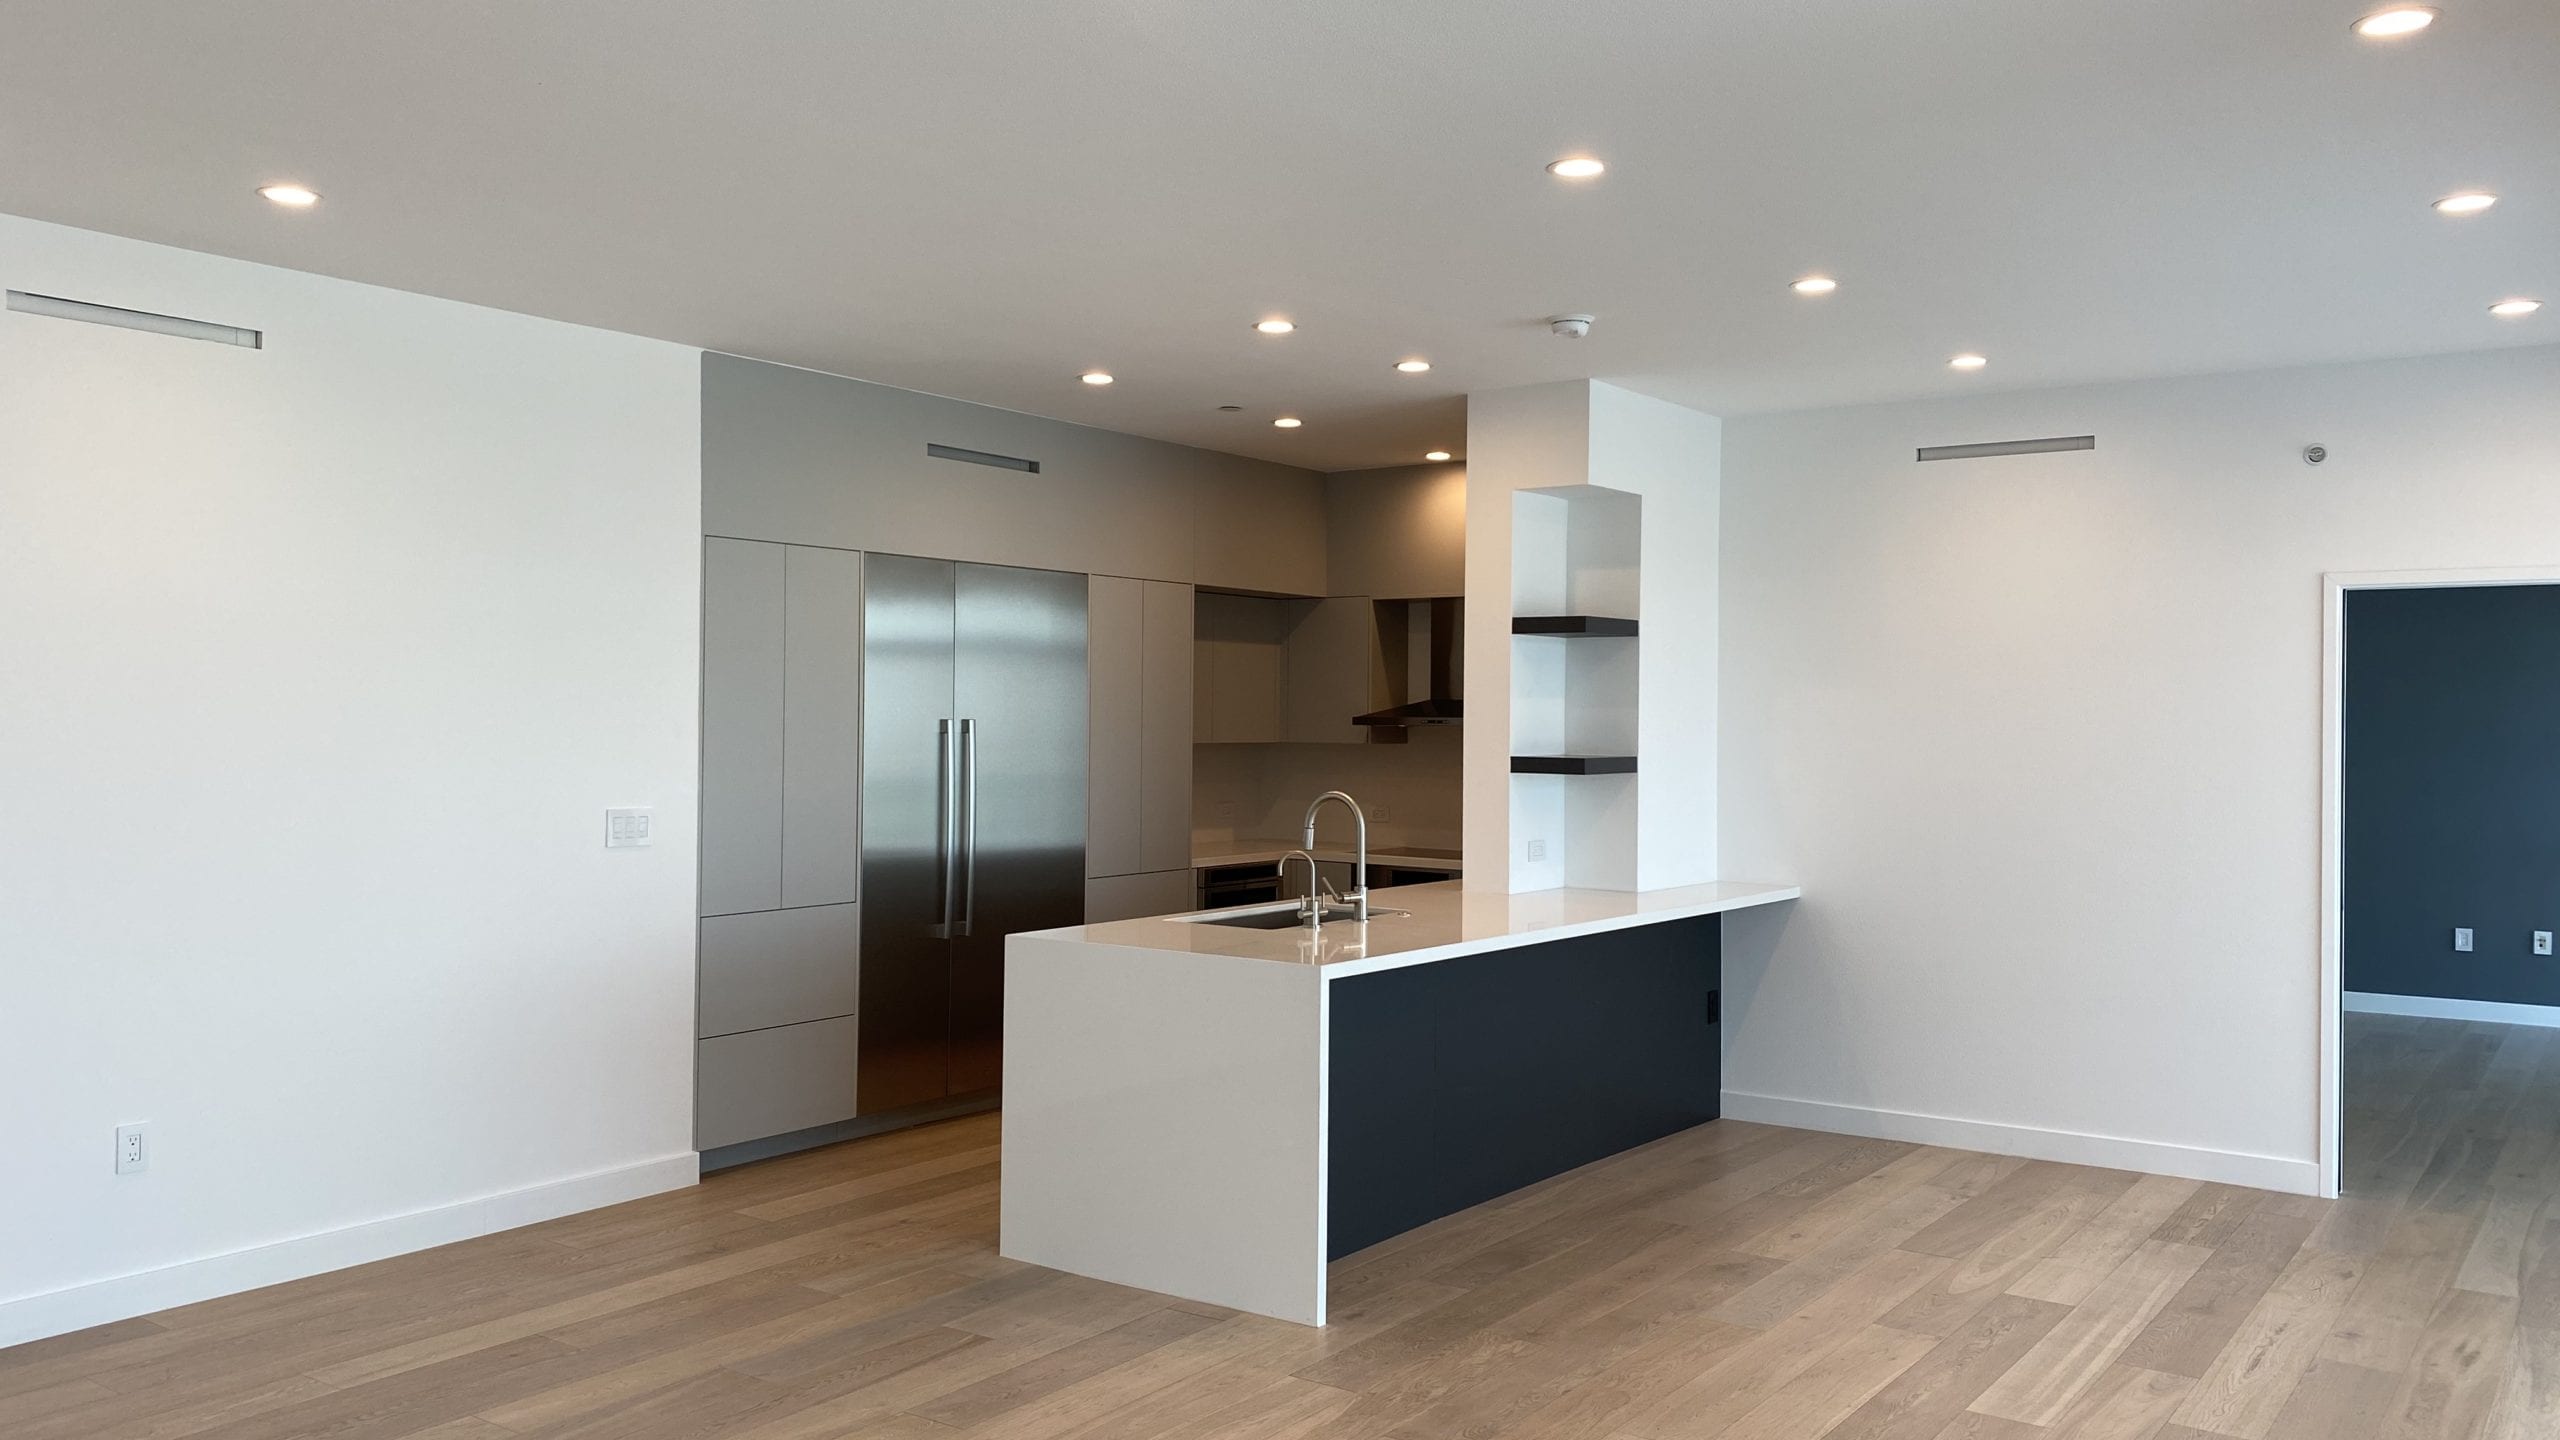 Contact Us | Home Renovations & Ground-up Developments | LA Design